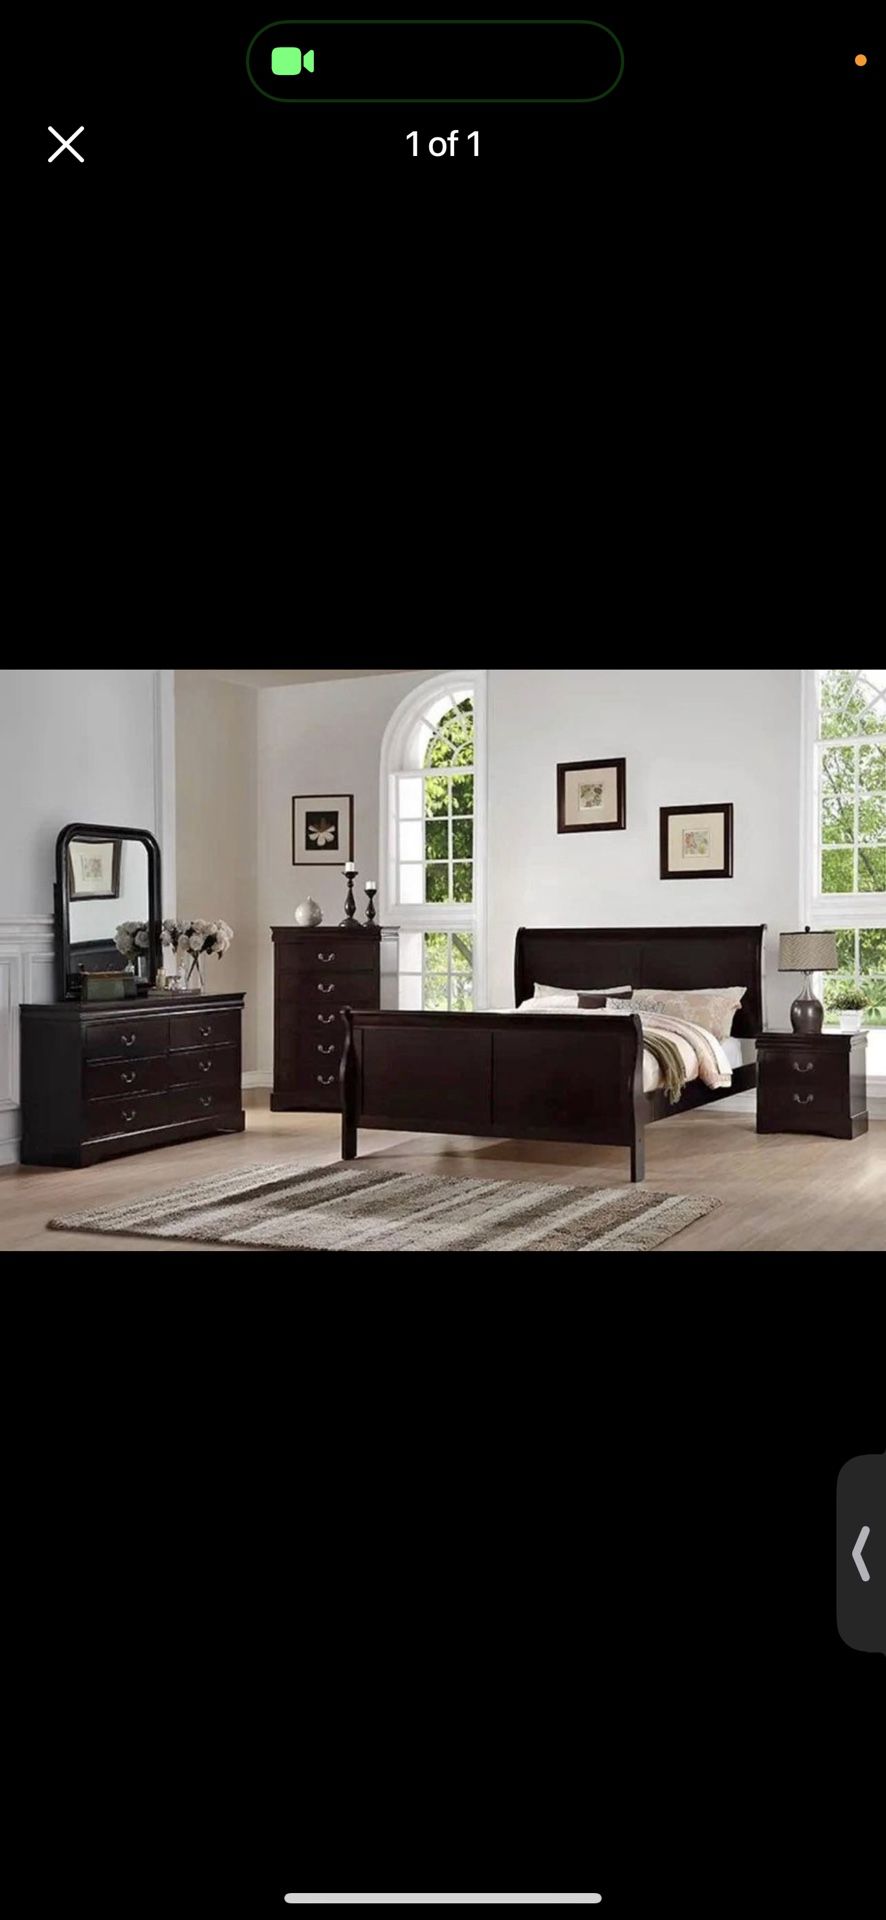 Brand New Complete Bedroom Set for $699!!!